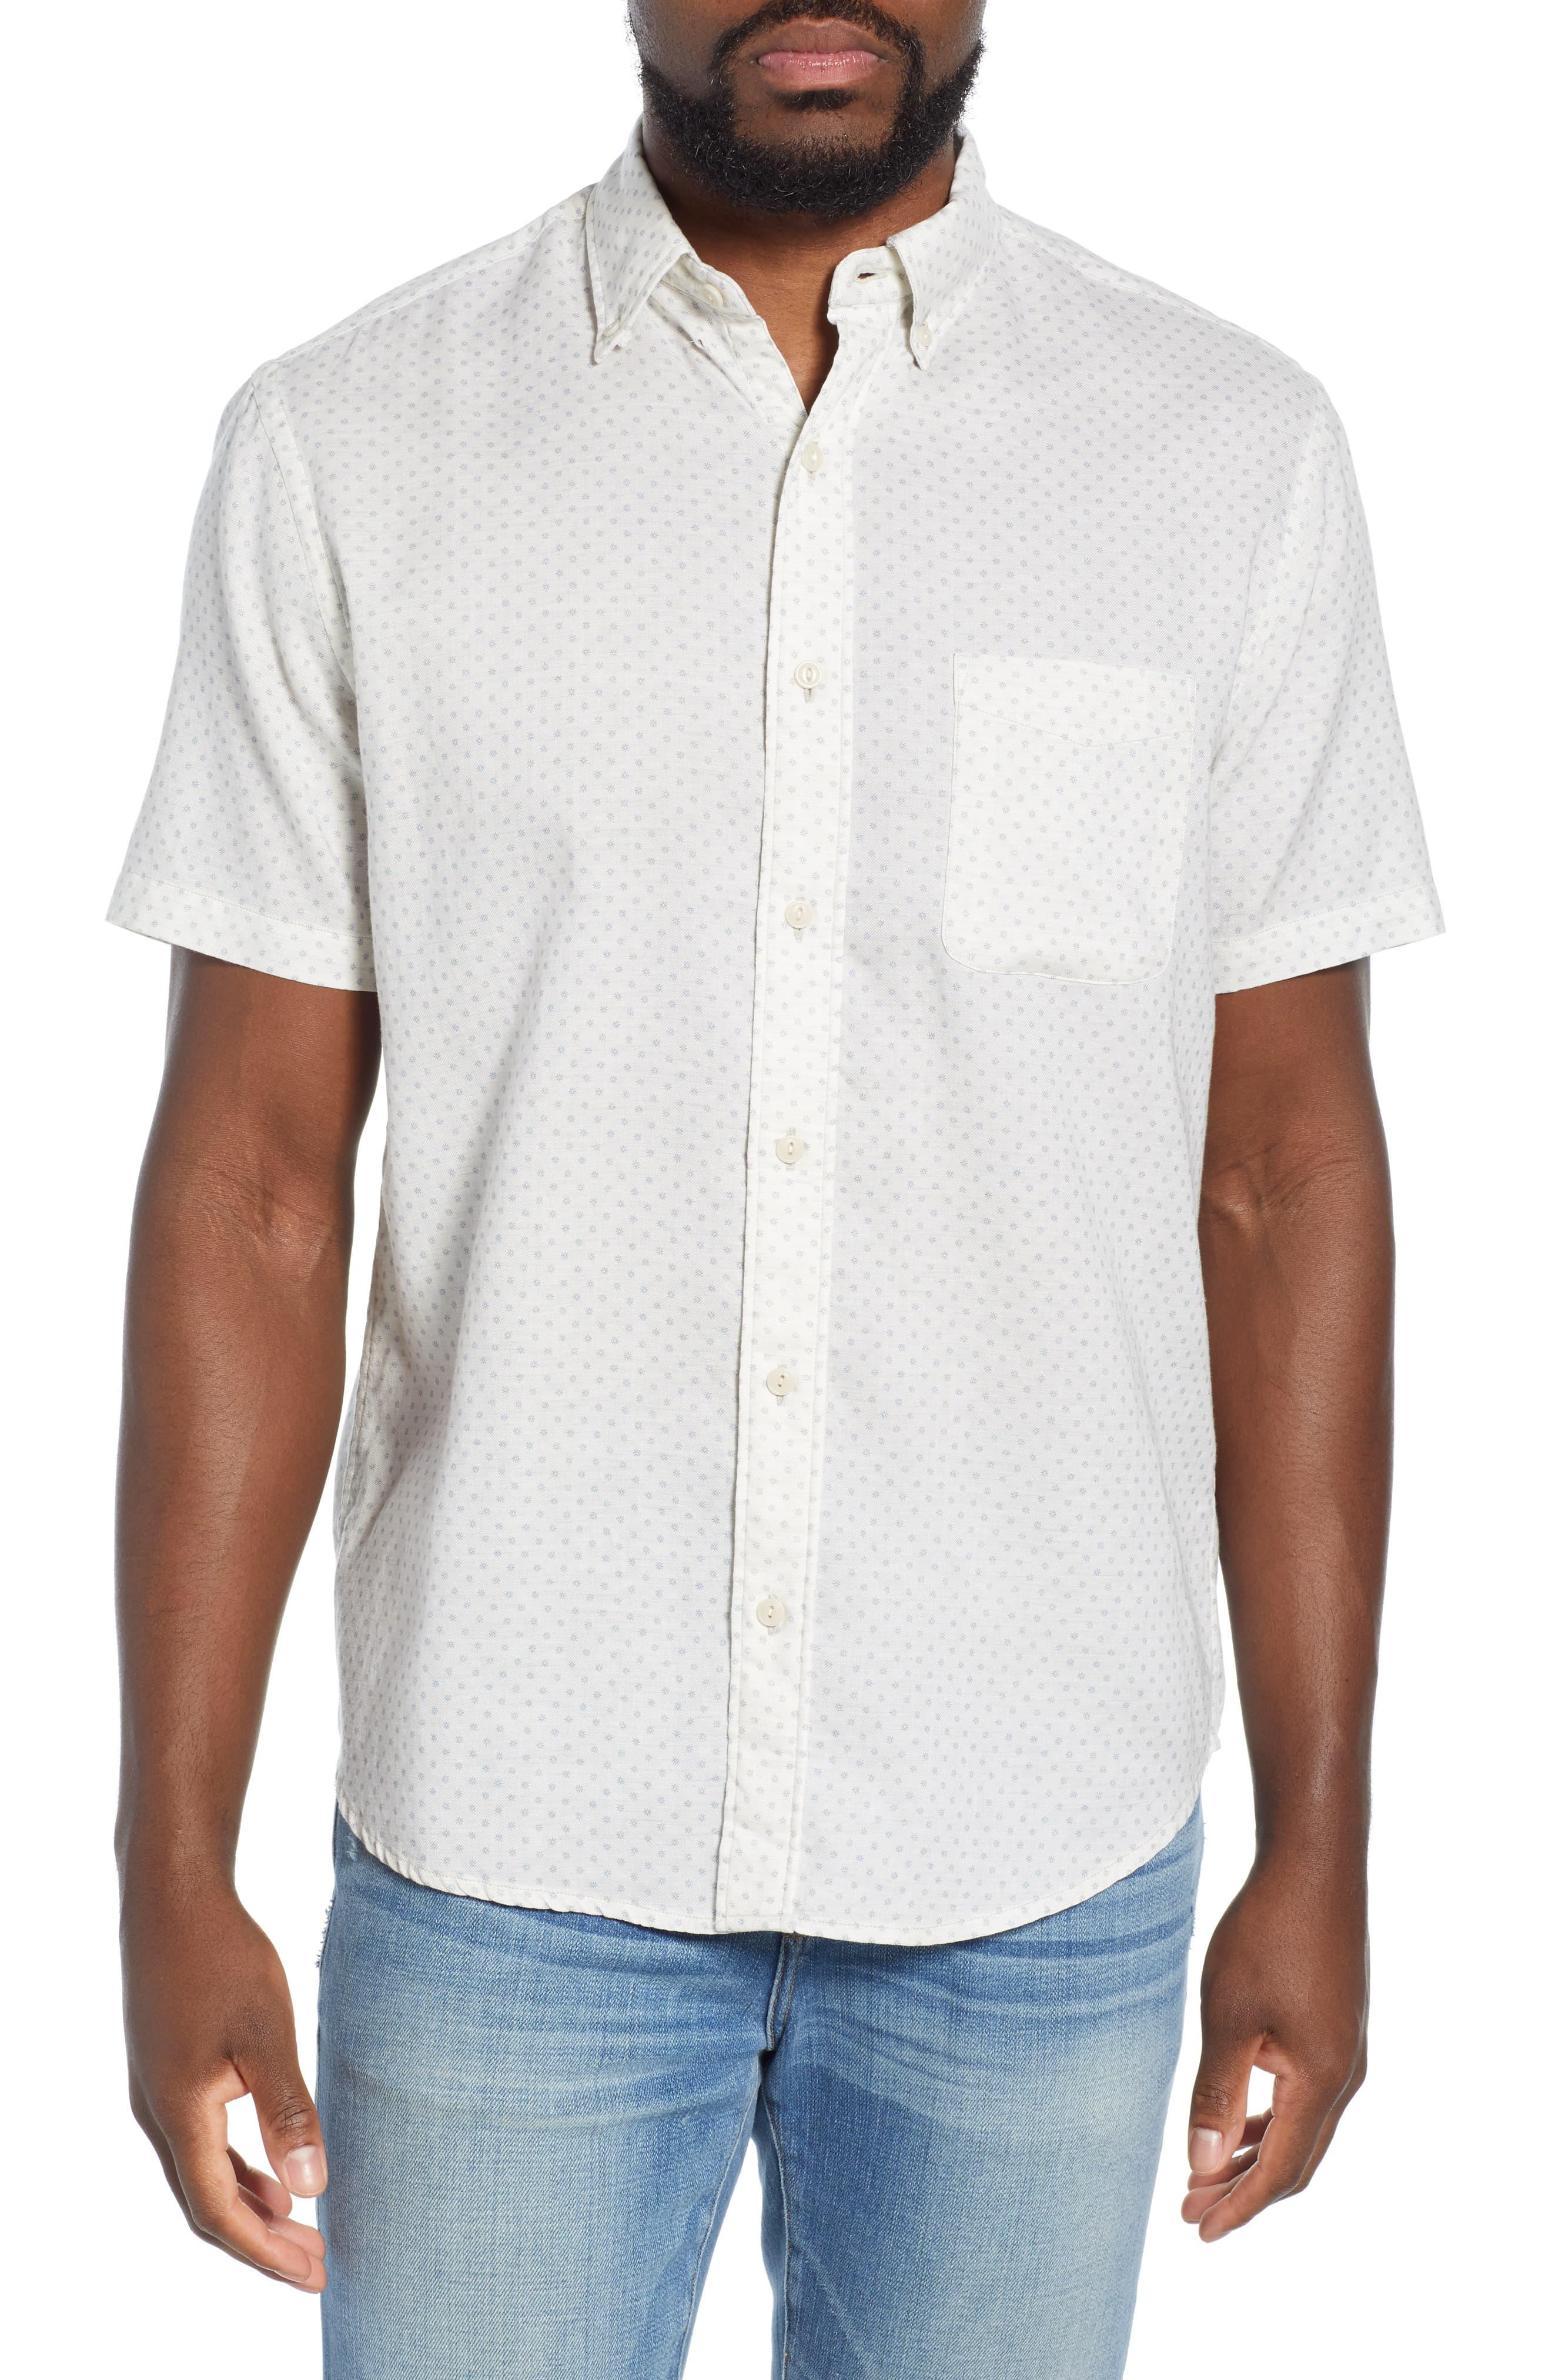 Faherty Brand Coast Regular Fit Print Sport Shirt in White for Men - Lyst